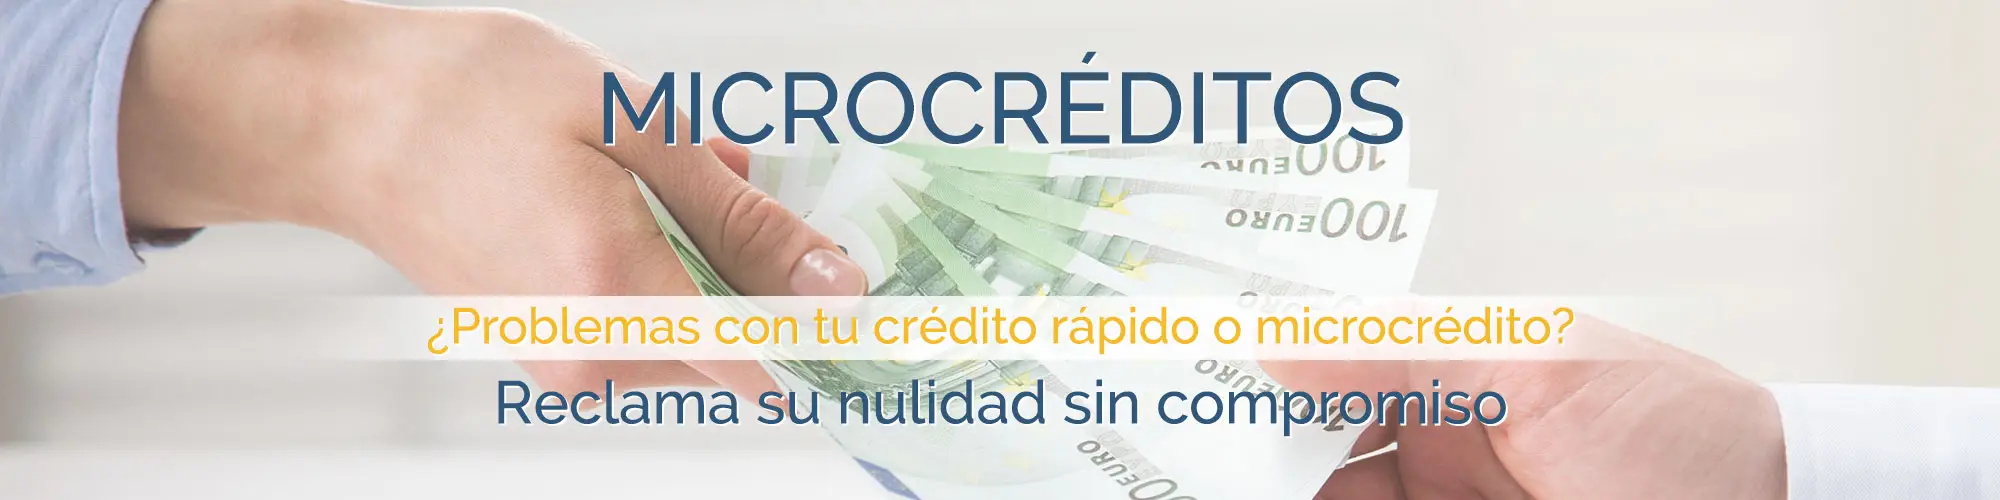 Microcréditos - Sin Deudas Tóxicas ABOGADOS